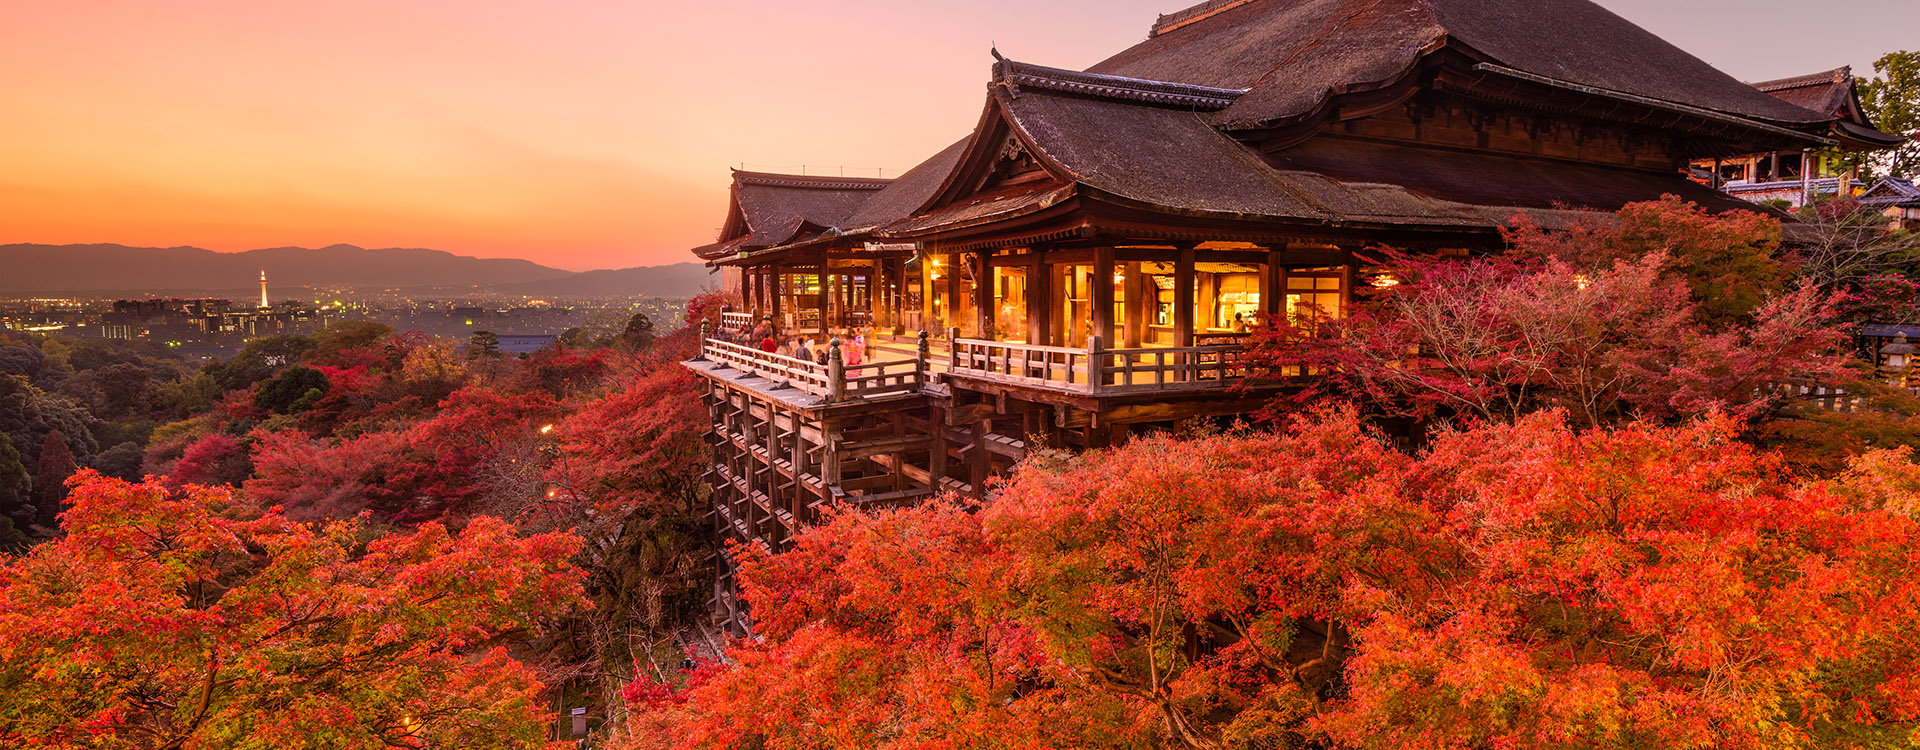 Kyoto, Japan at Kiyomizu-dera Temple during autumn season